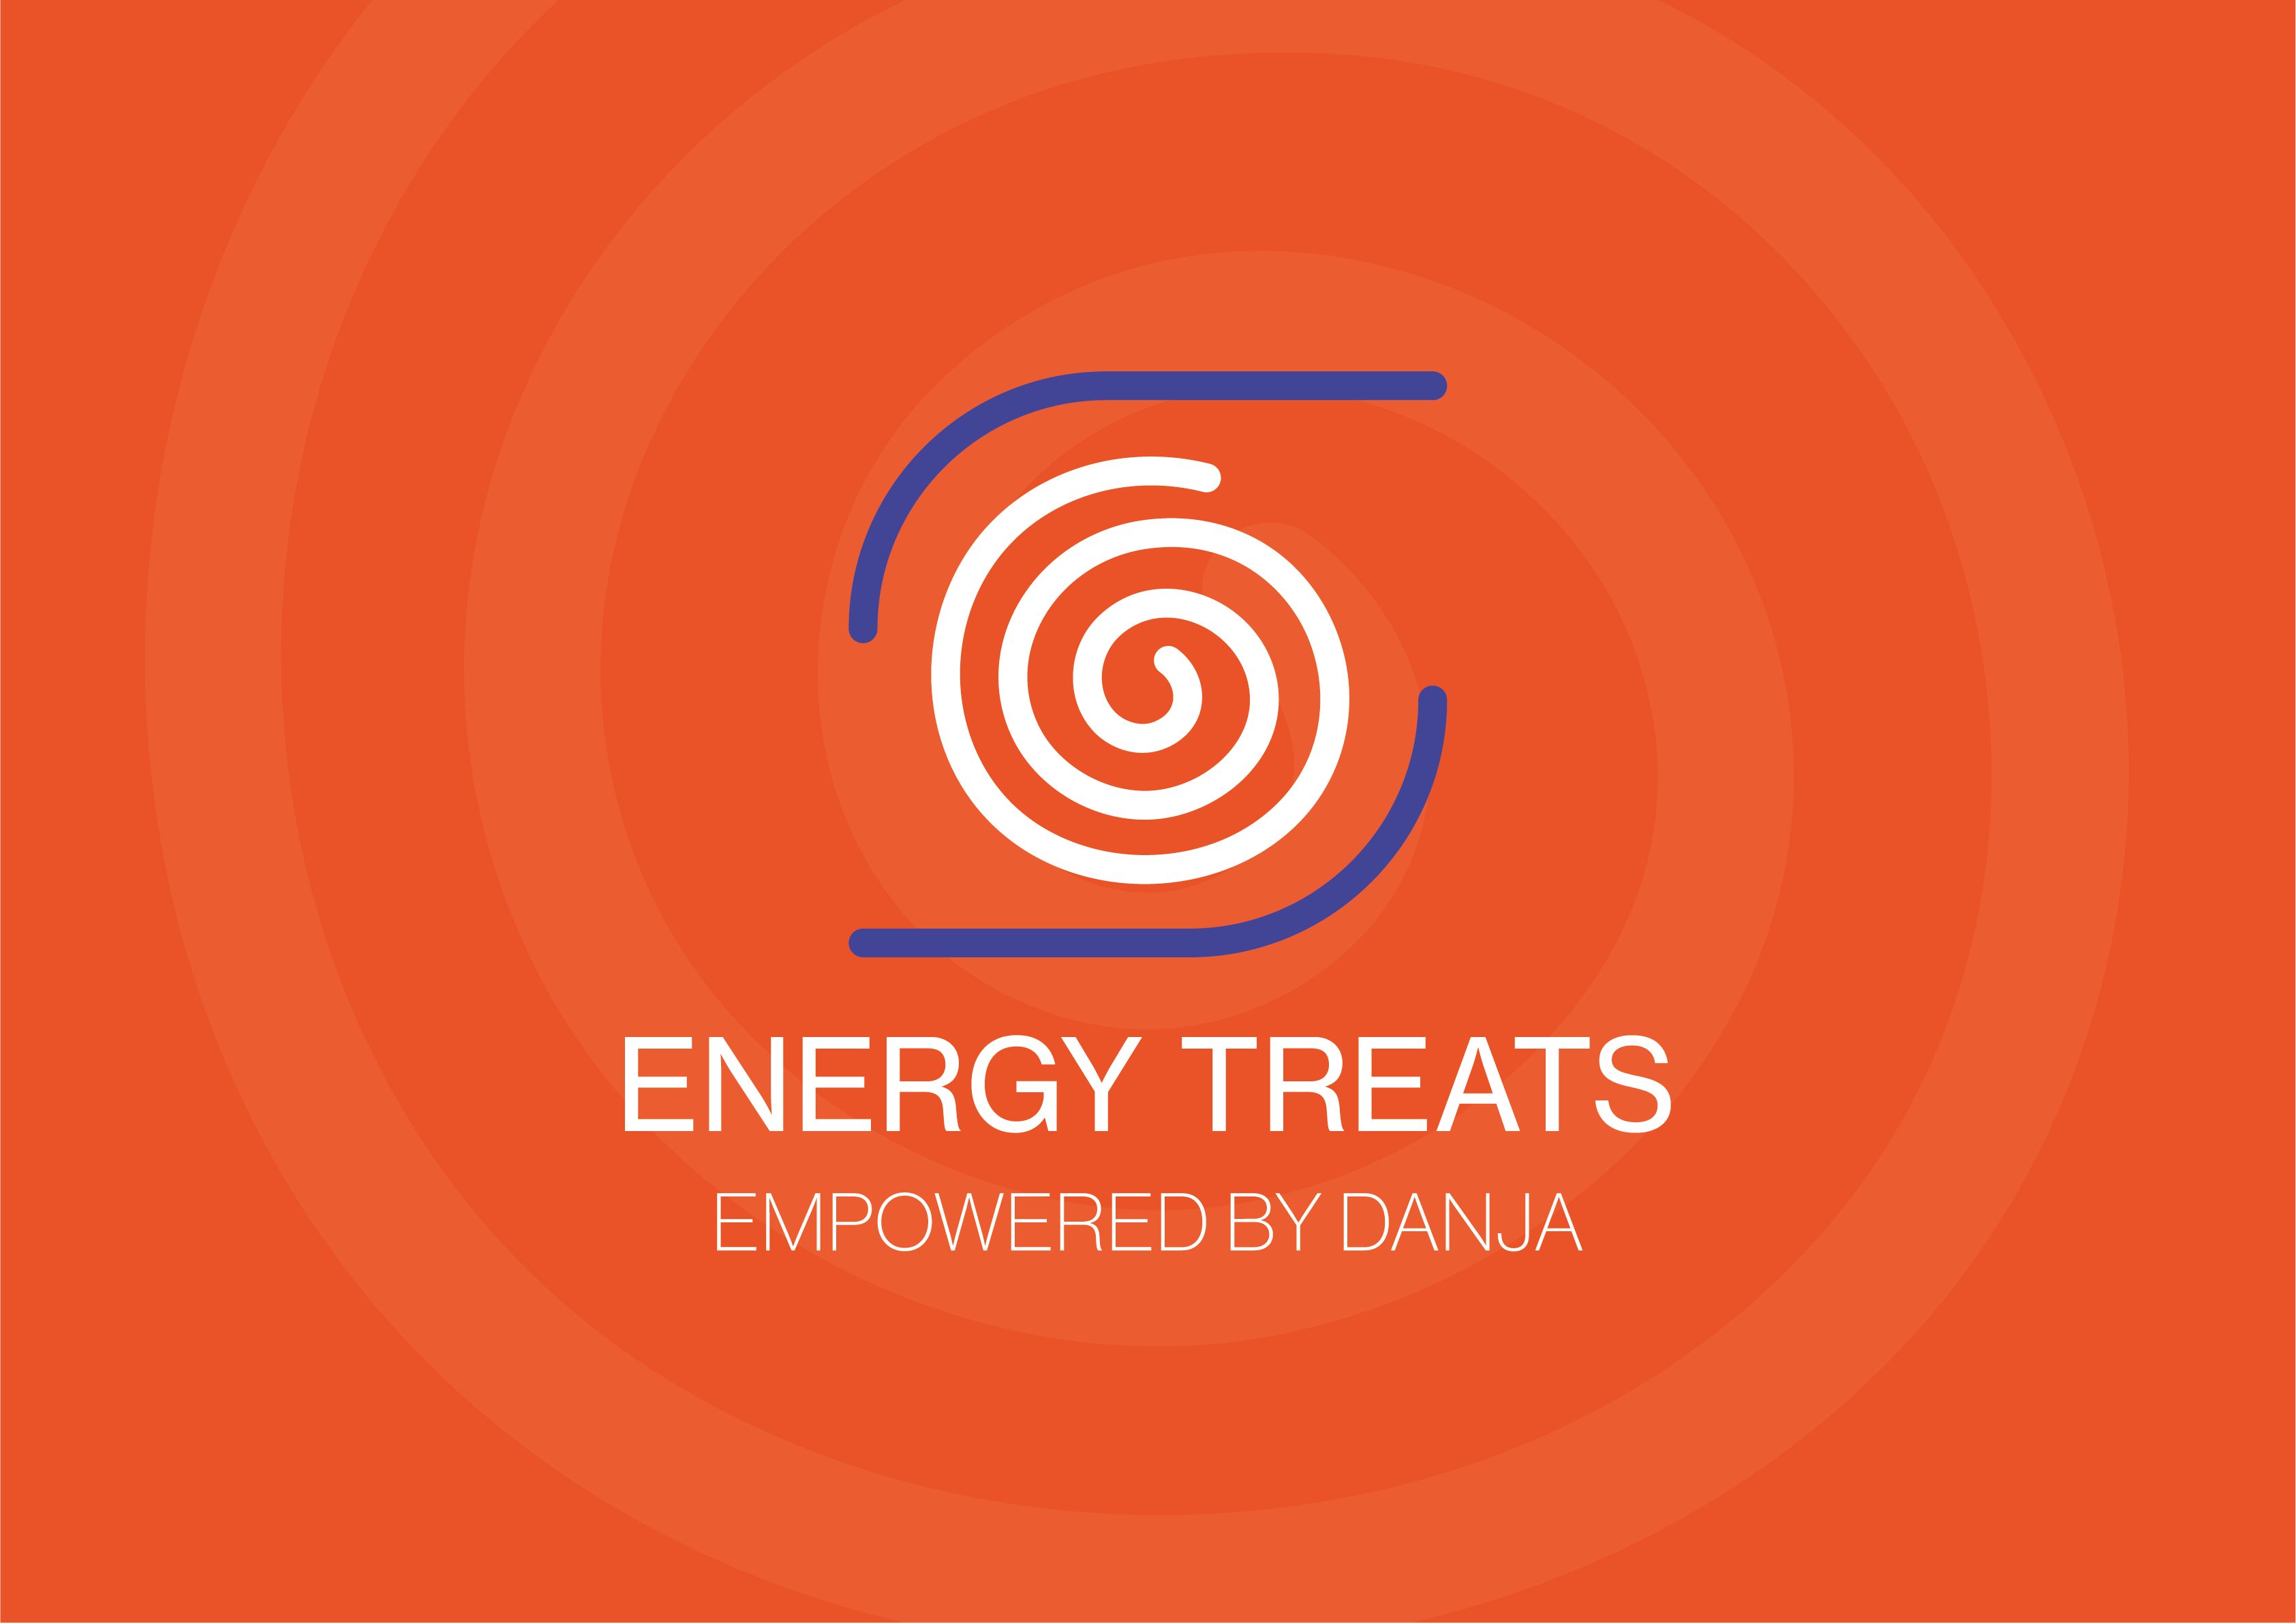 Energy Treats - Logo oranje achtergrond met patroon